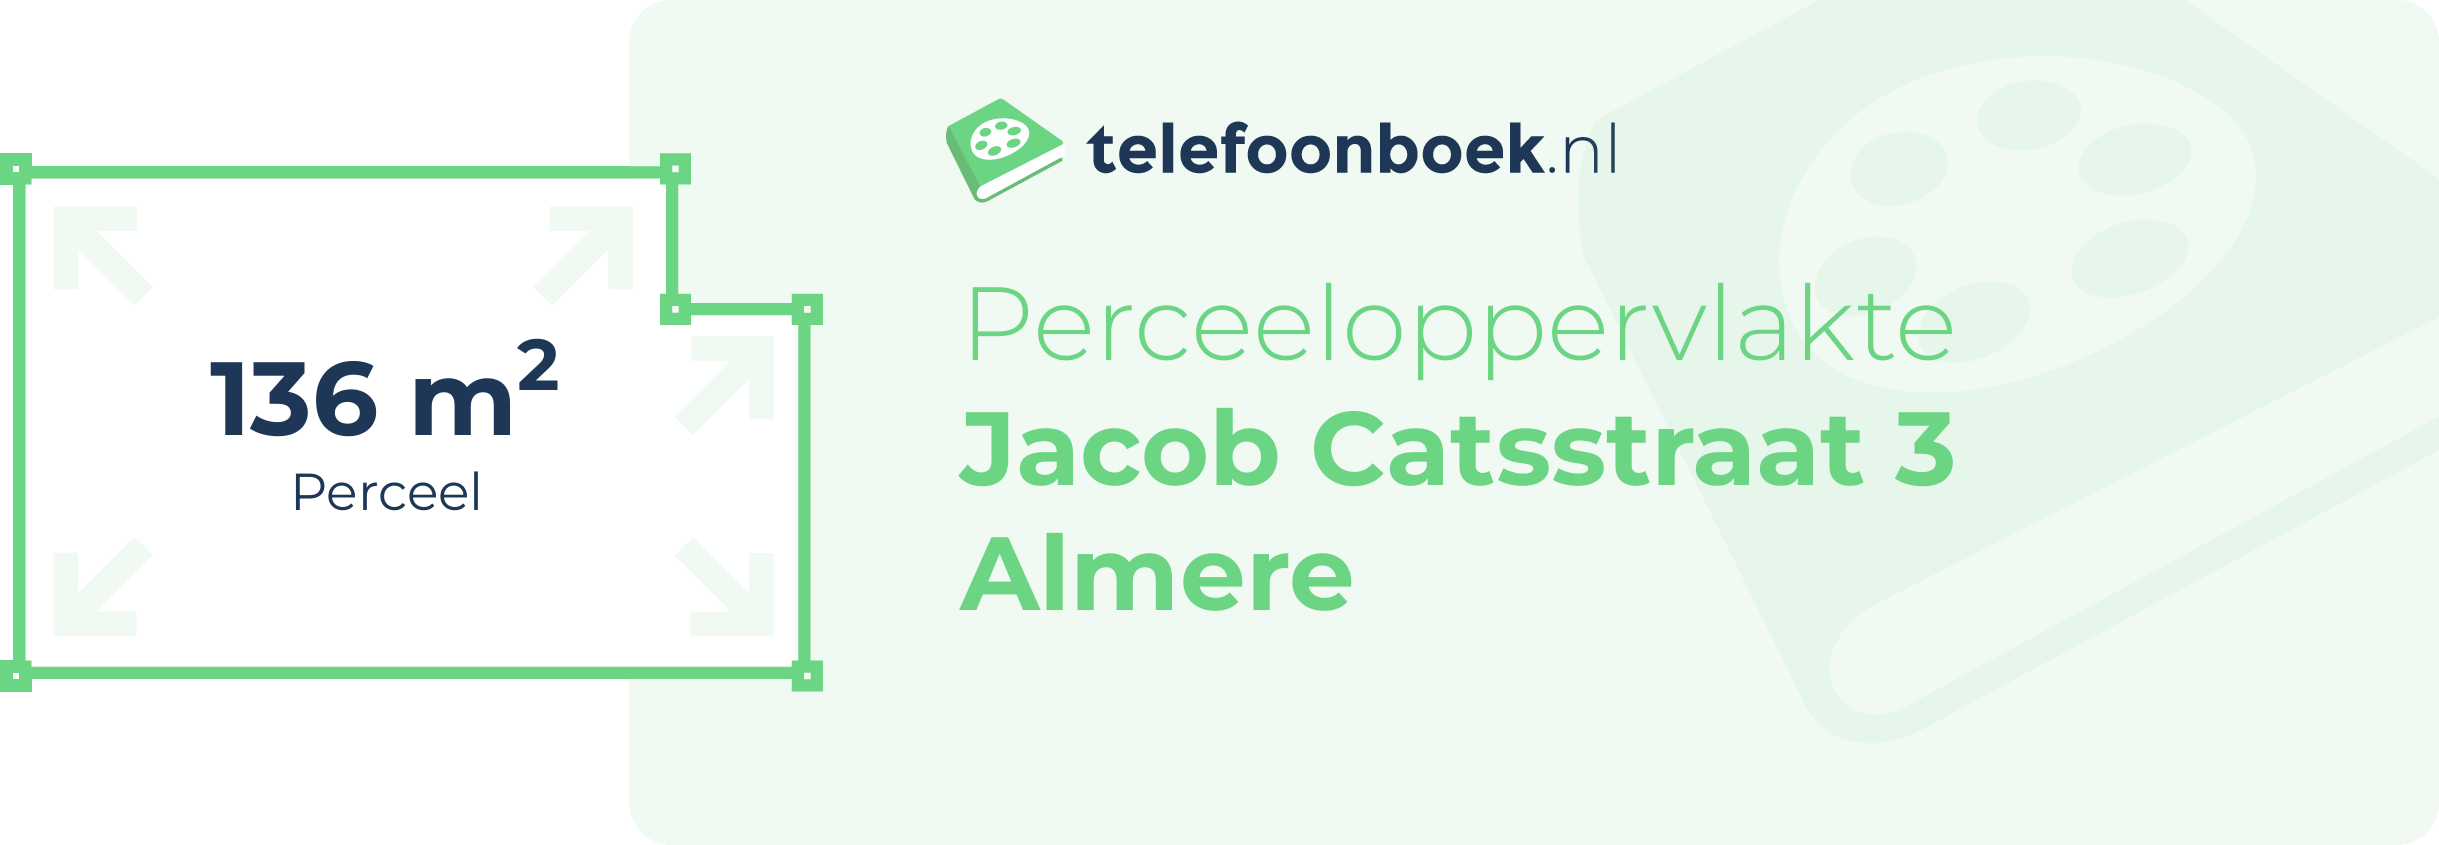 Perceeloppervlakte Jacob Catsstraat 3 Almere